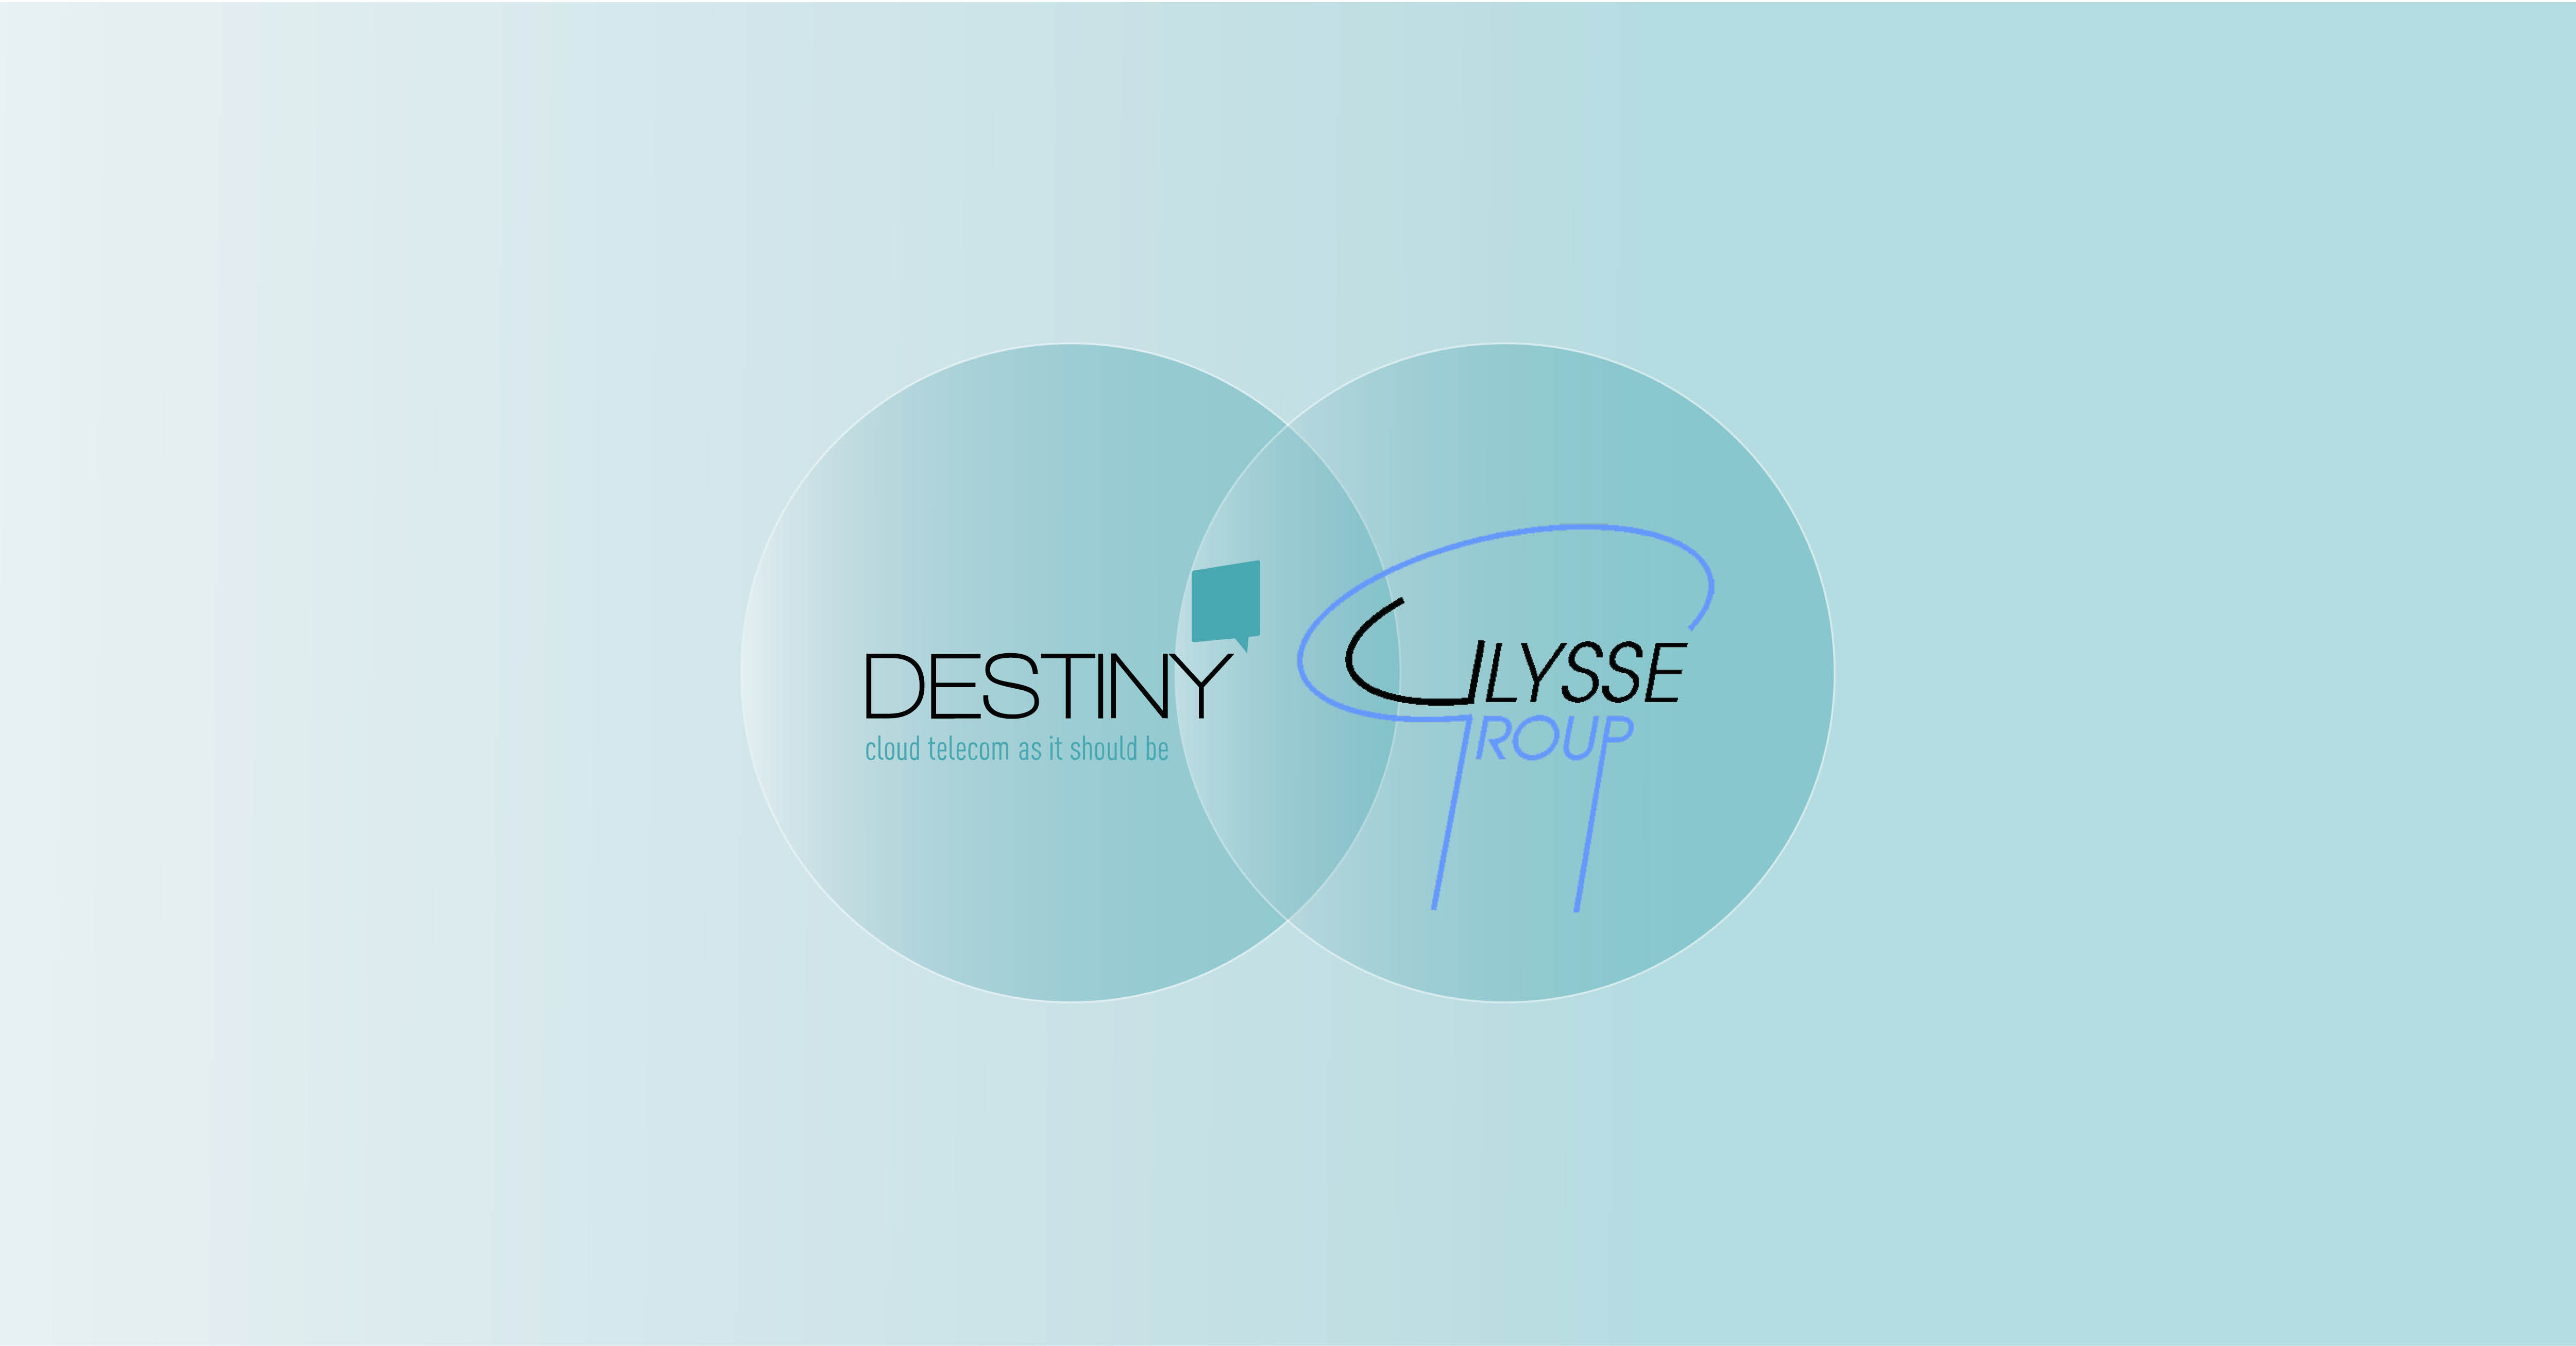 Acquisition Ulysse Group by Destiny